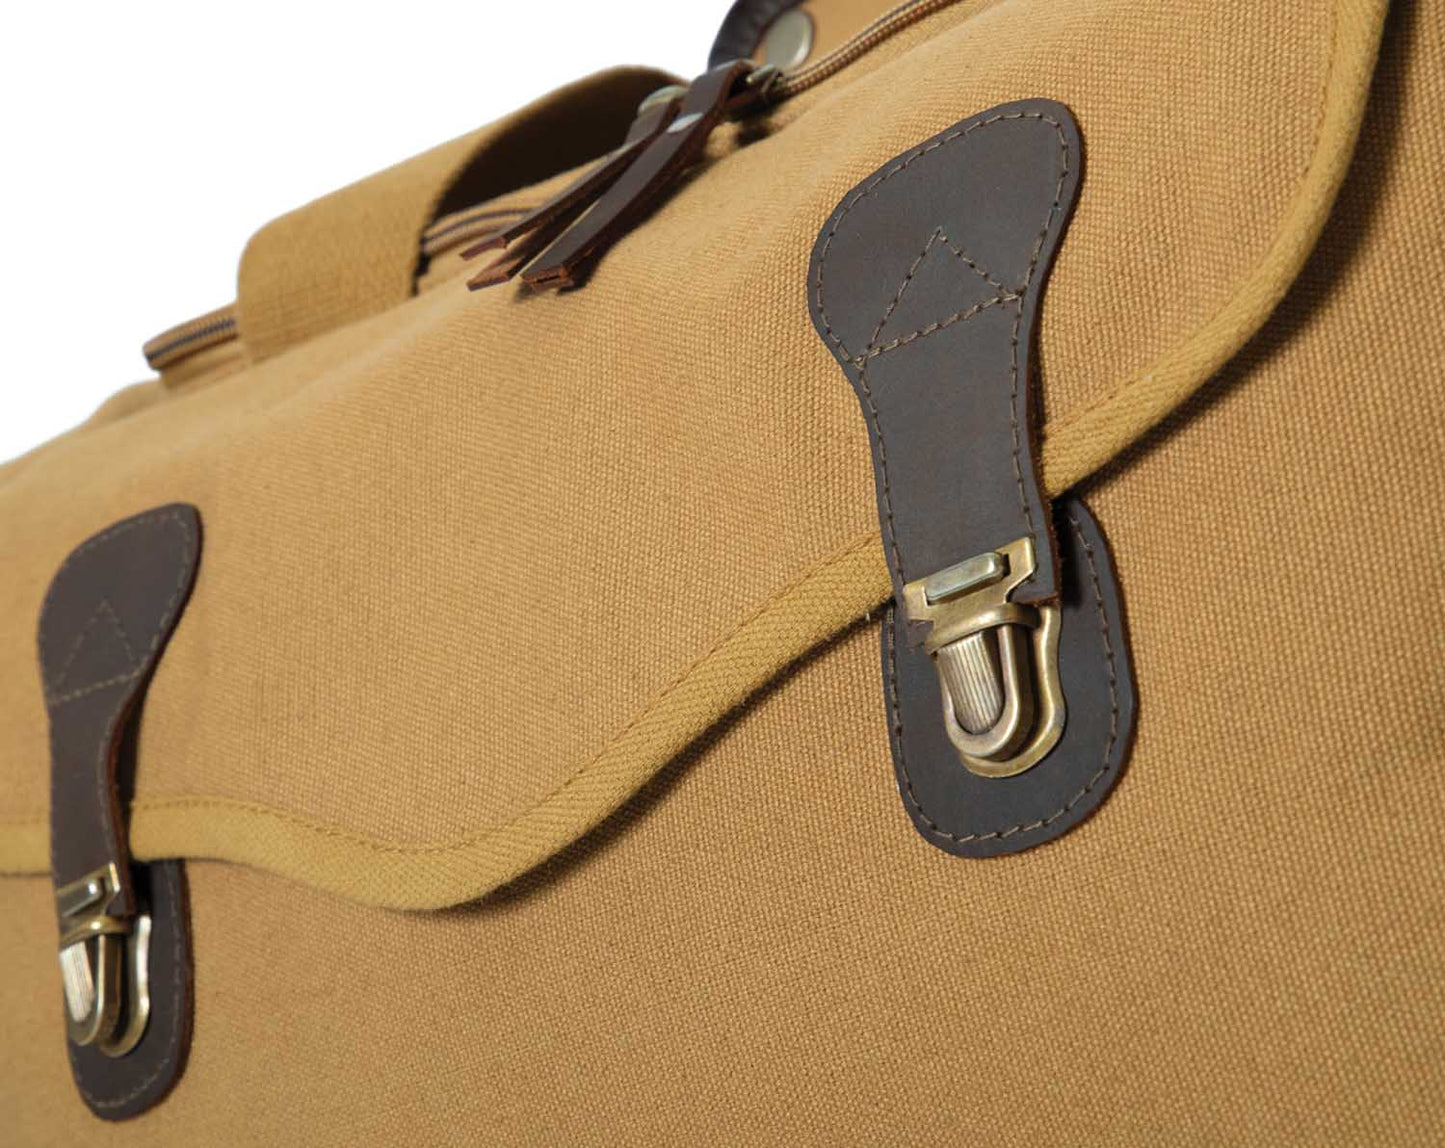 Duffel Bags - Rothco Canvas Long Weekend Bag